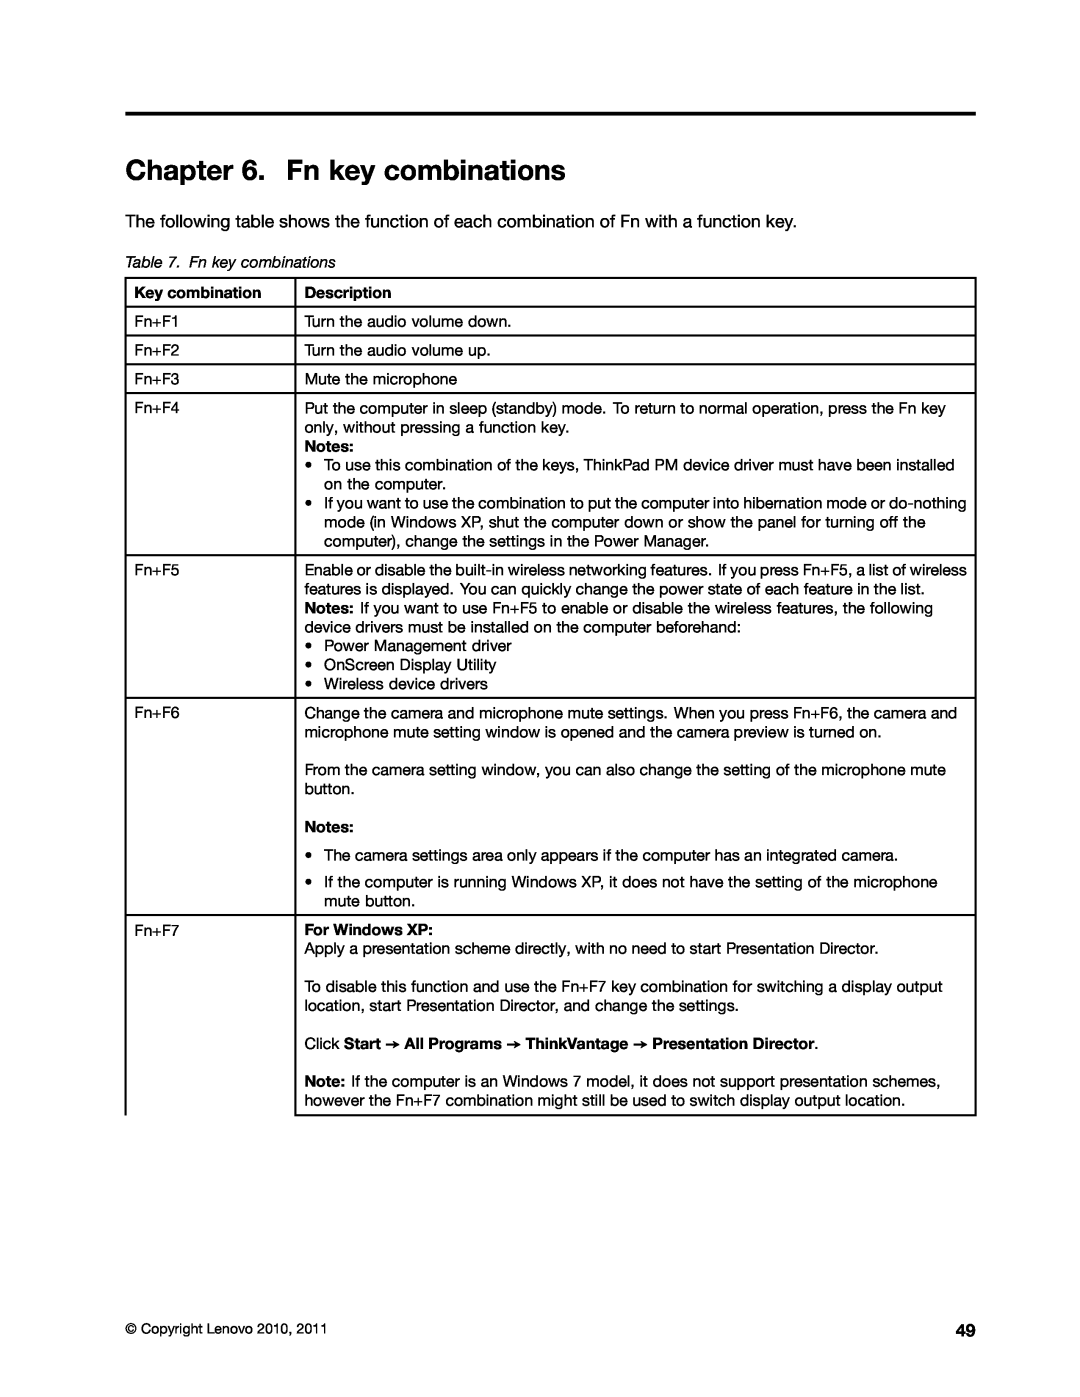 Lenovo E10 manual Fn key combinations, Key combination, Description, For Windows XP 